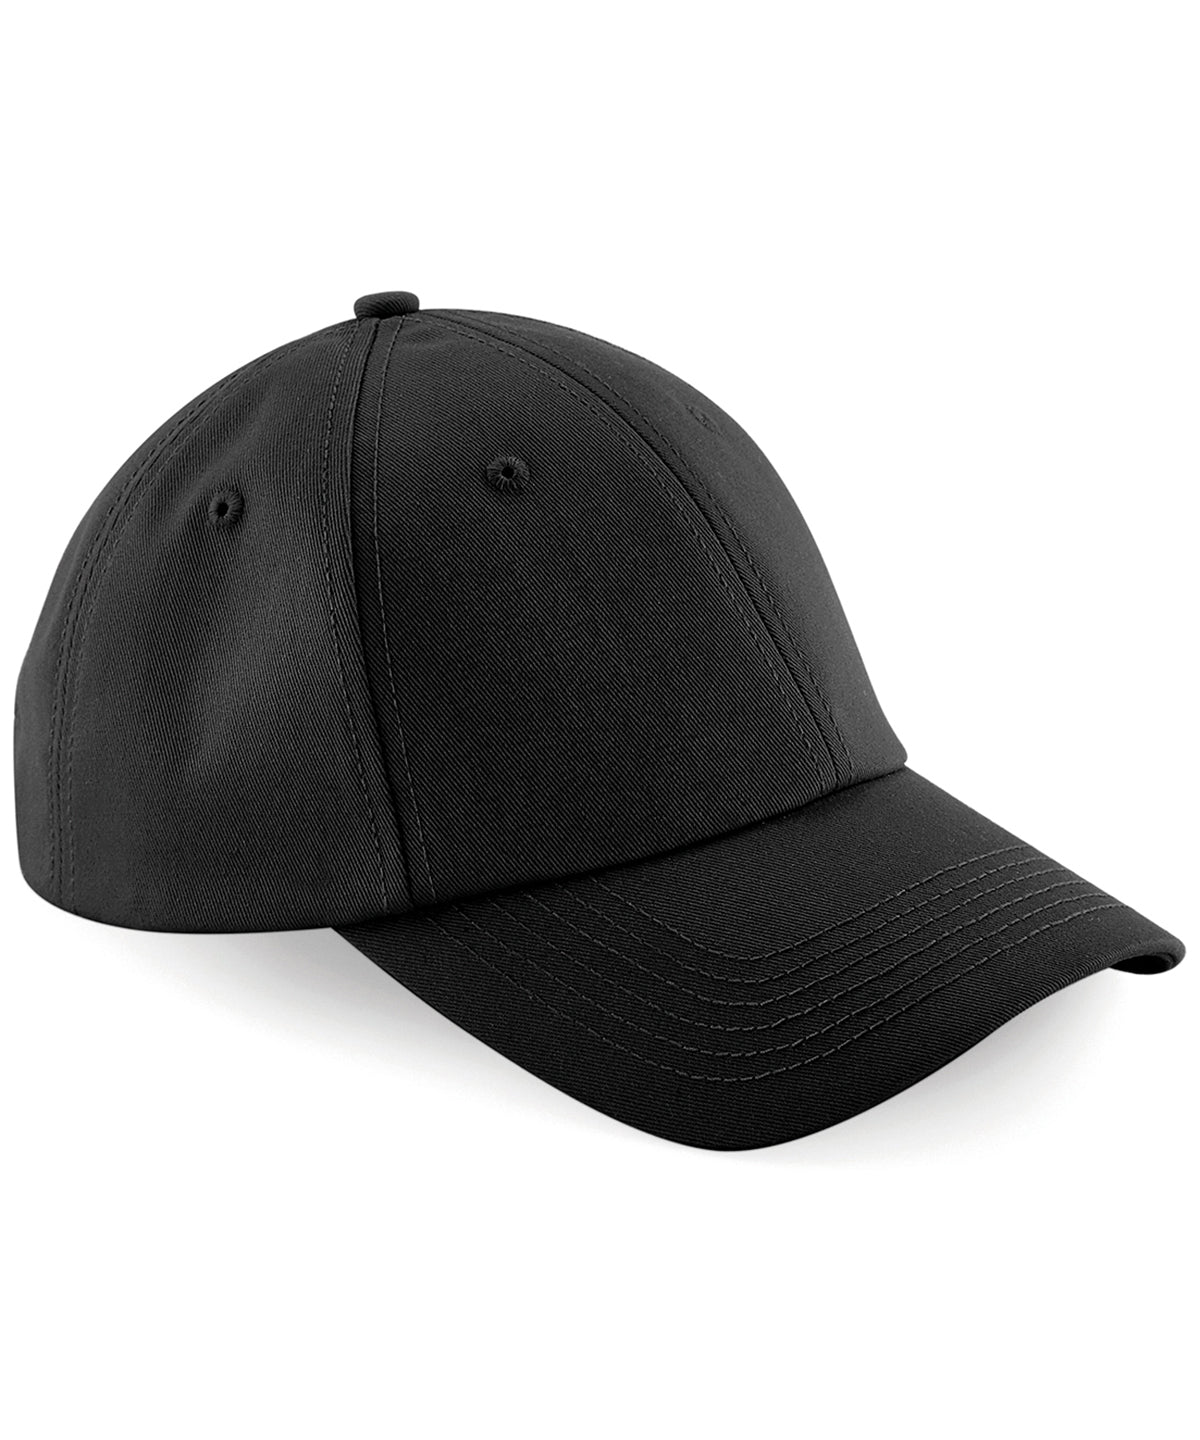 Beechfield Authentic baseball cap